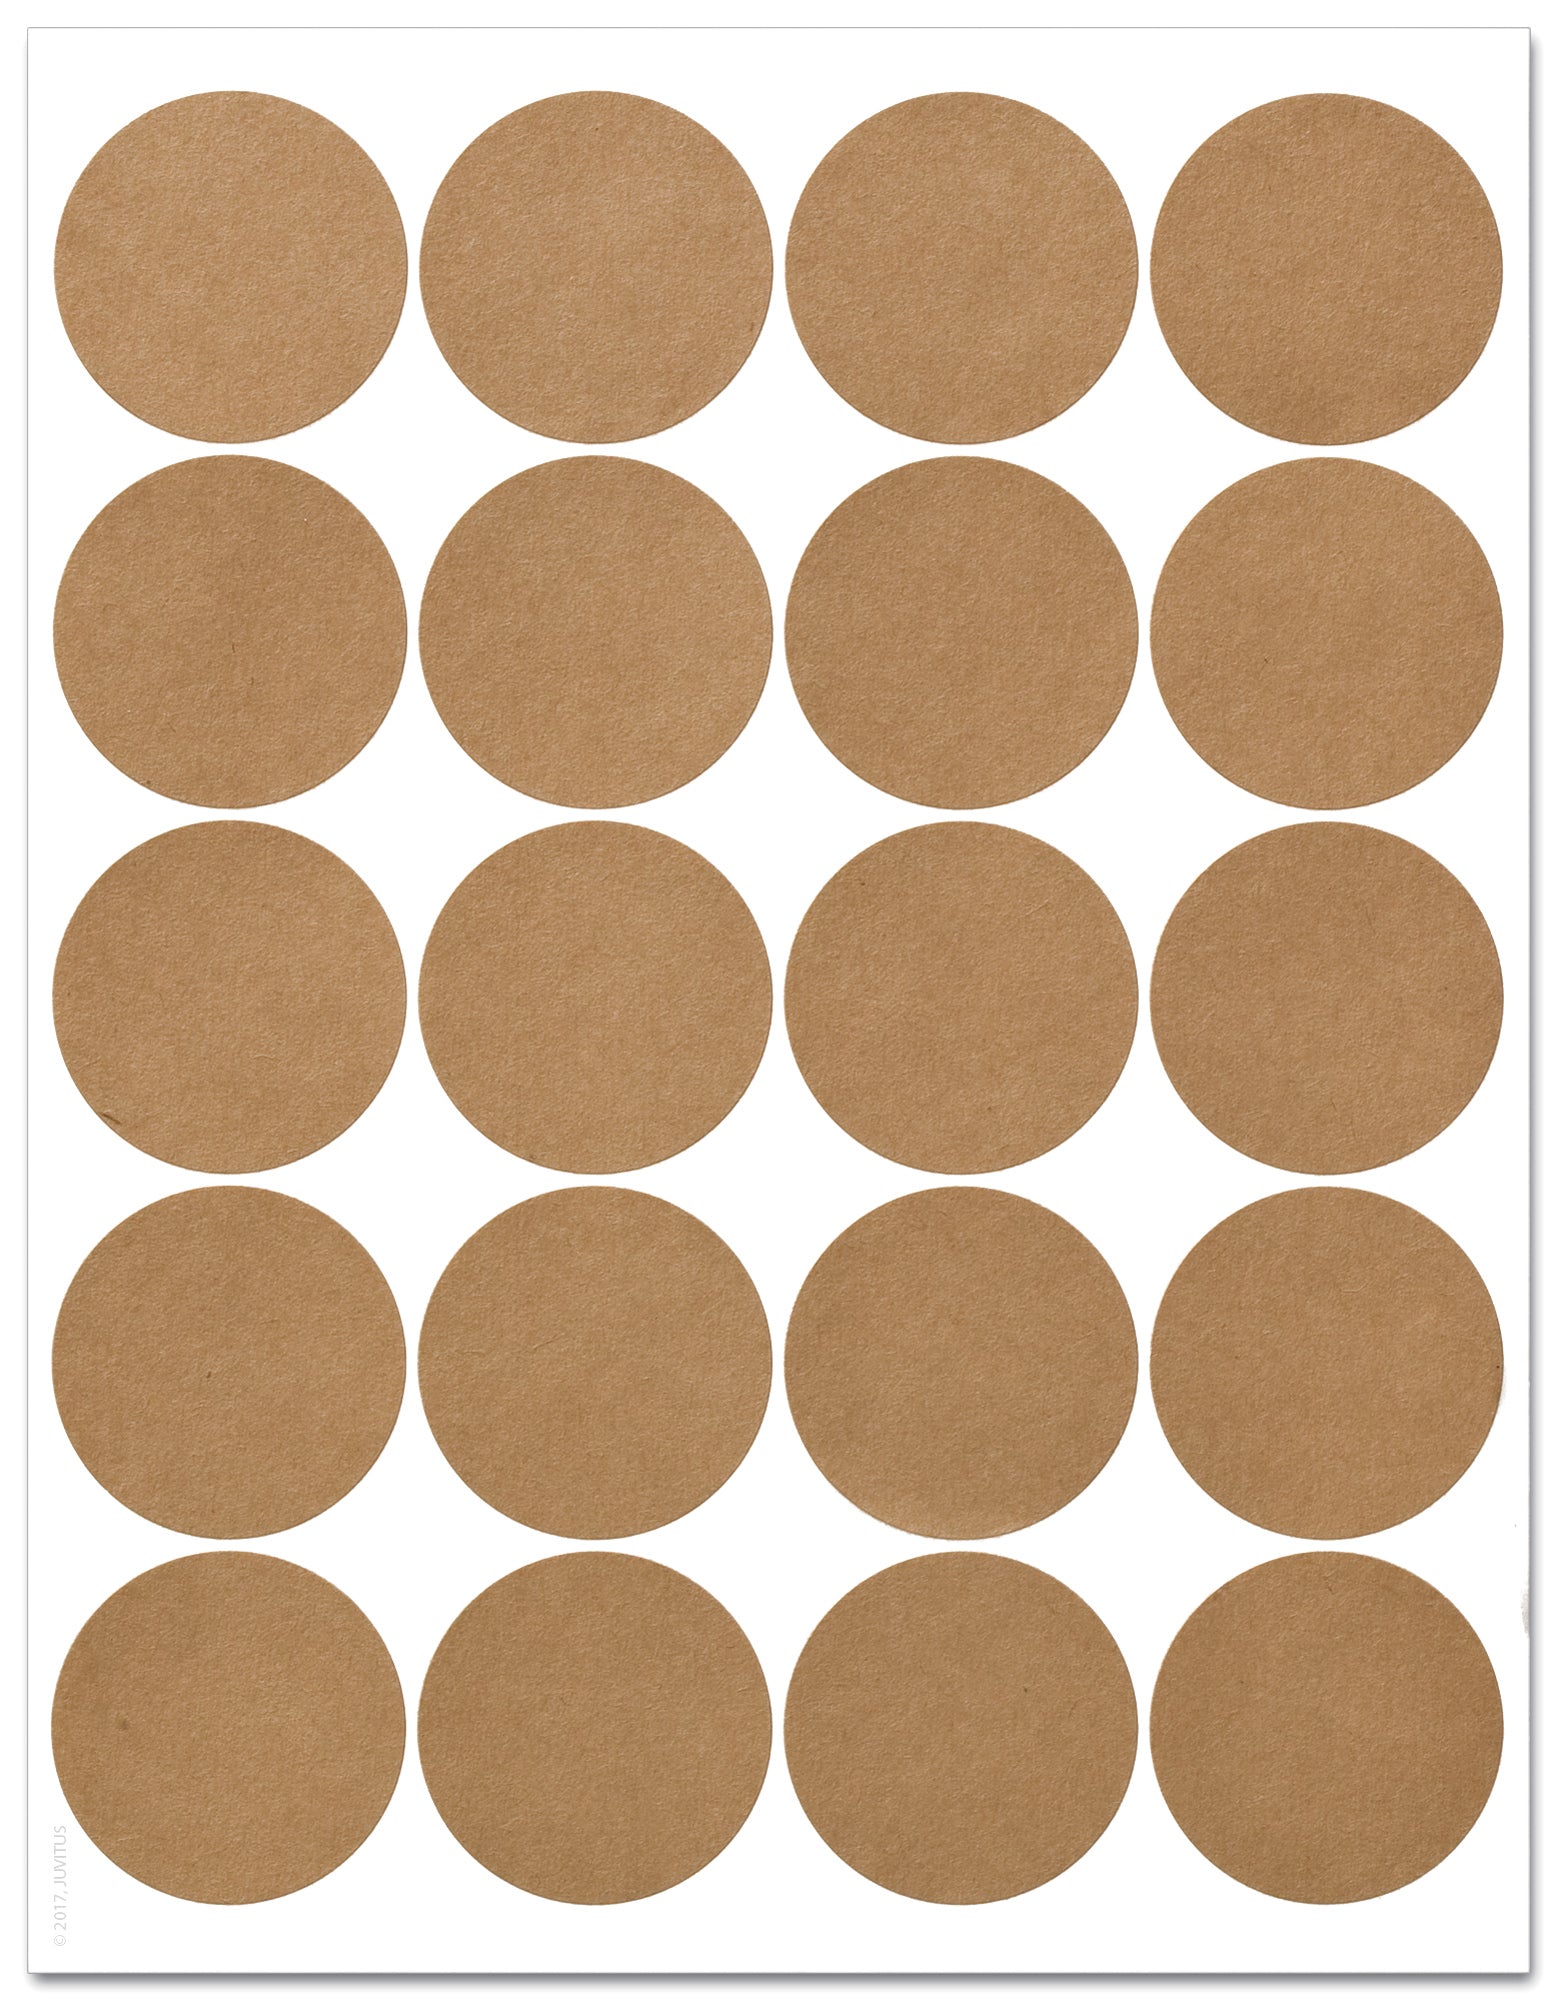 Sticker Paper, 100 Sheets, Brown Kraft